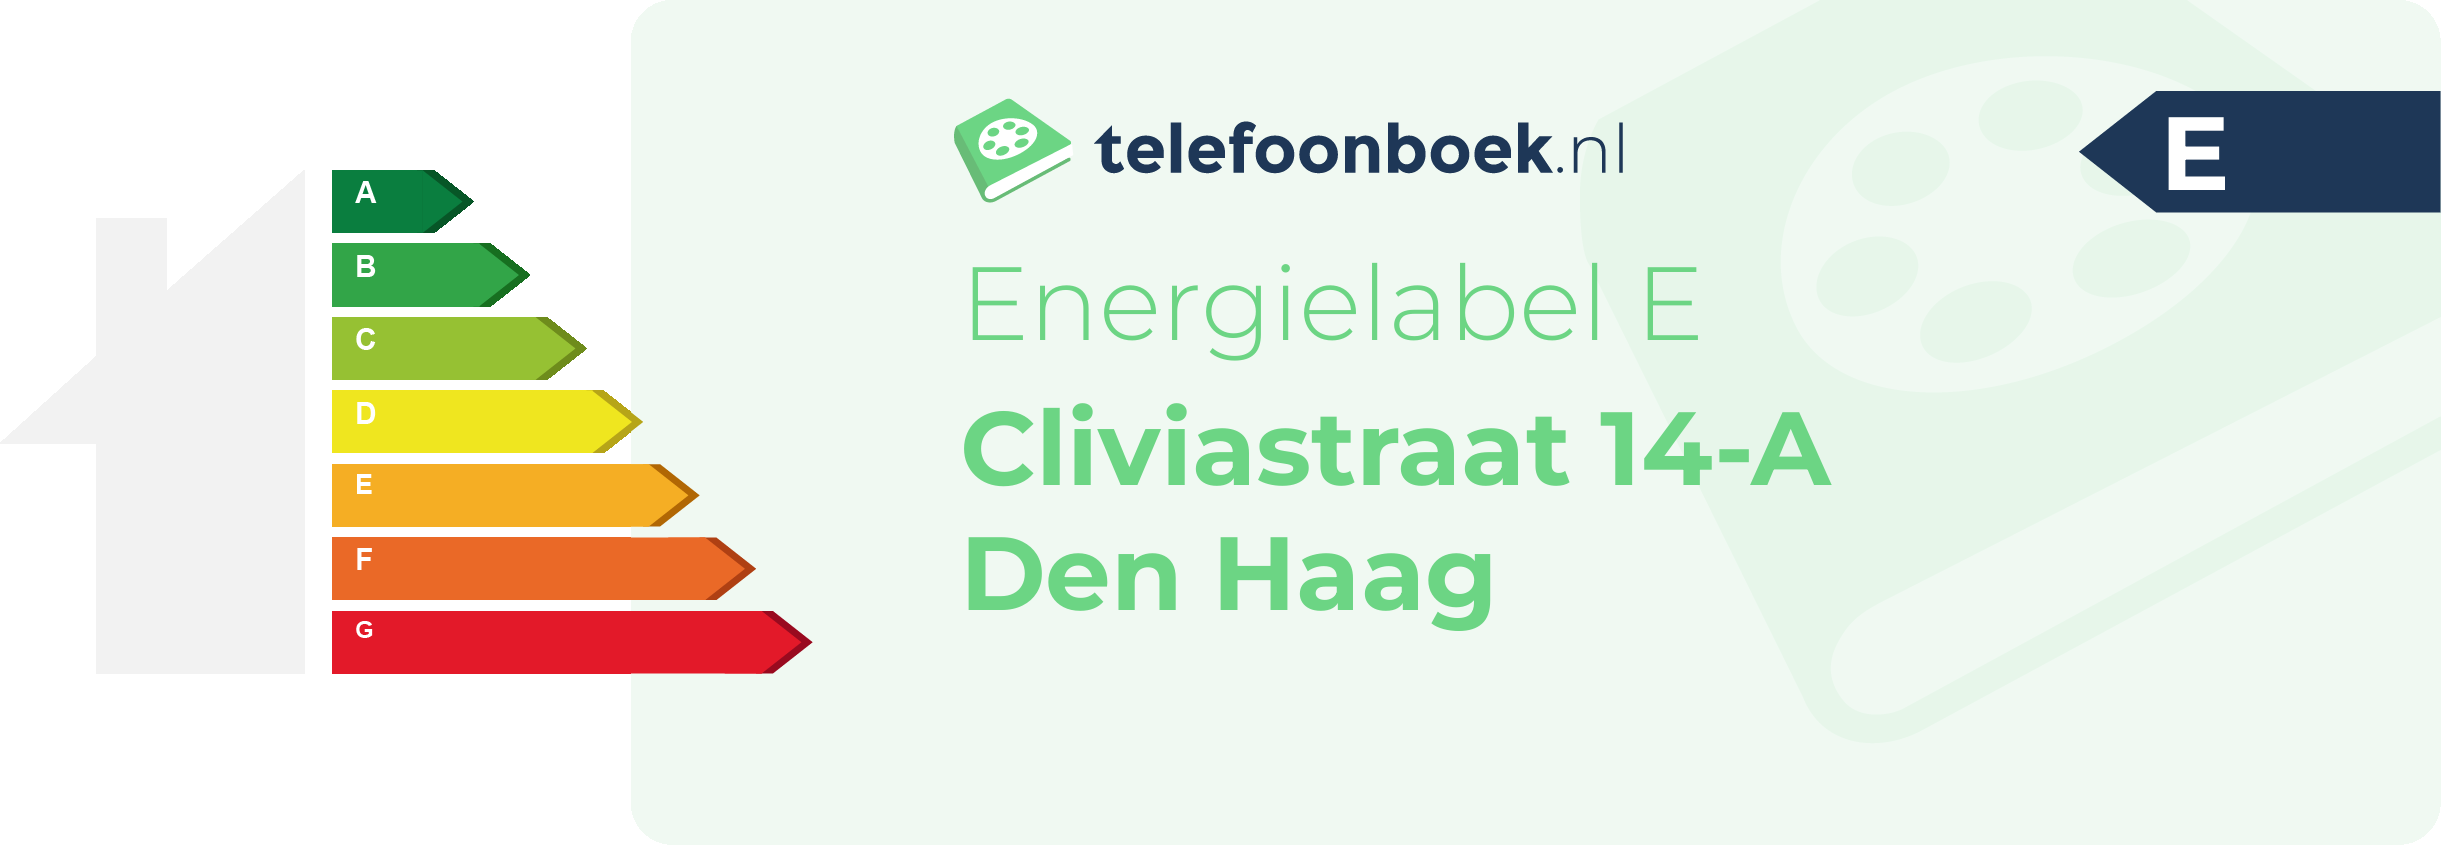 Energielabel Cliviastraat 14-A Den Haag